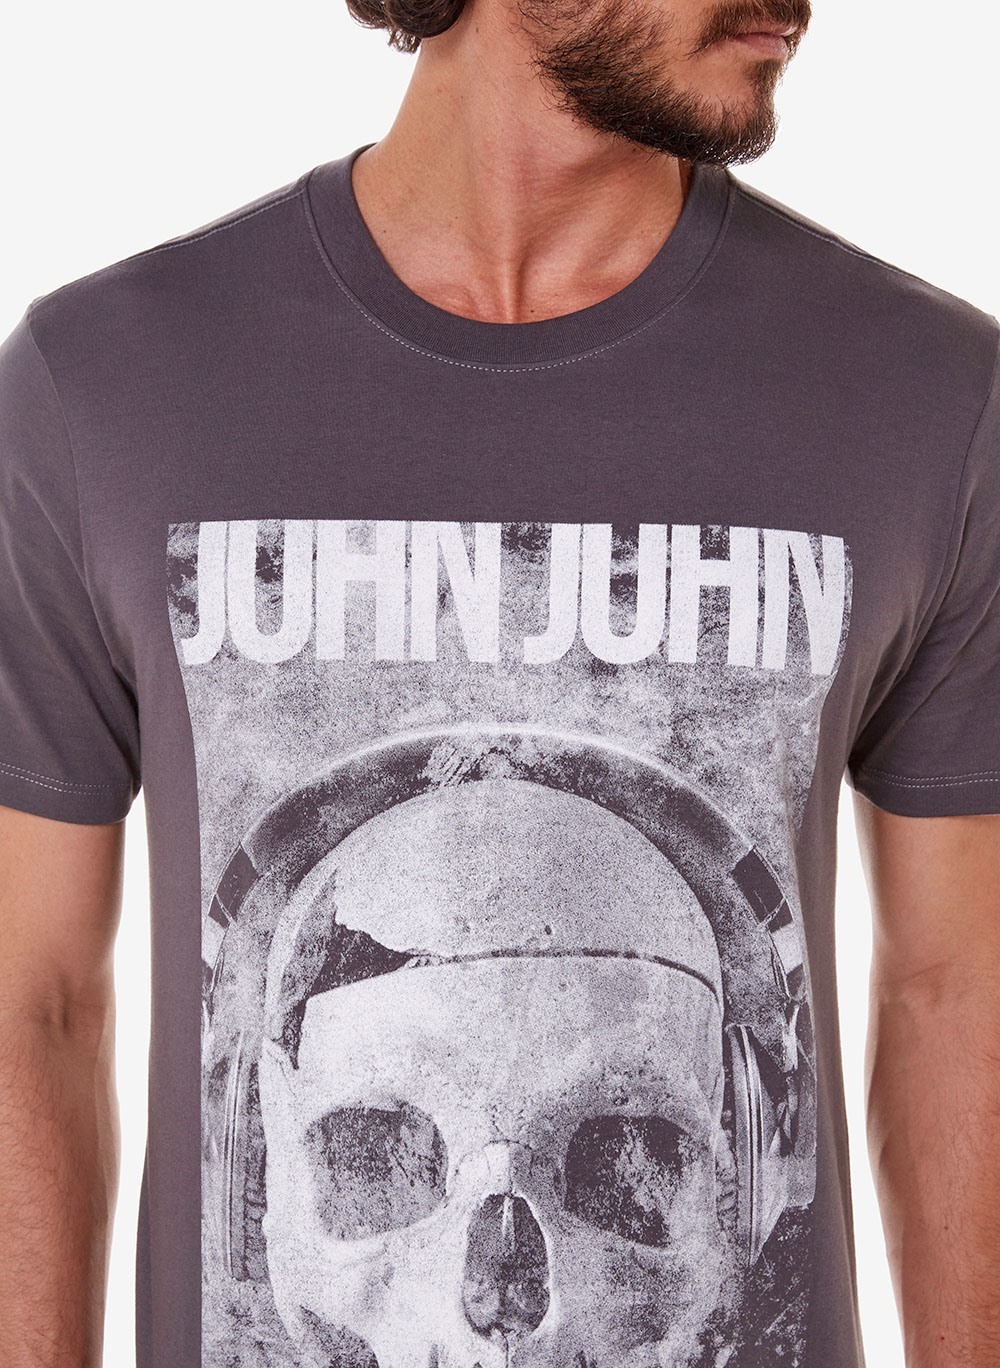 Camiseta Skull Profile John John Masculina 42.54.5159 - Camiseta Skull  Profile John John Masculina - JOHN JOHN MASC